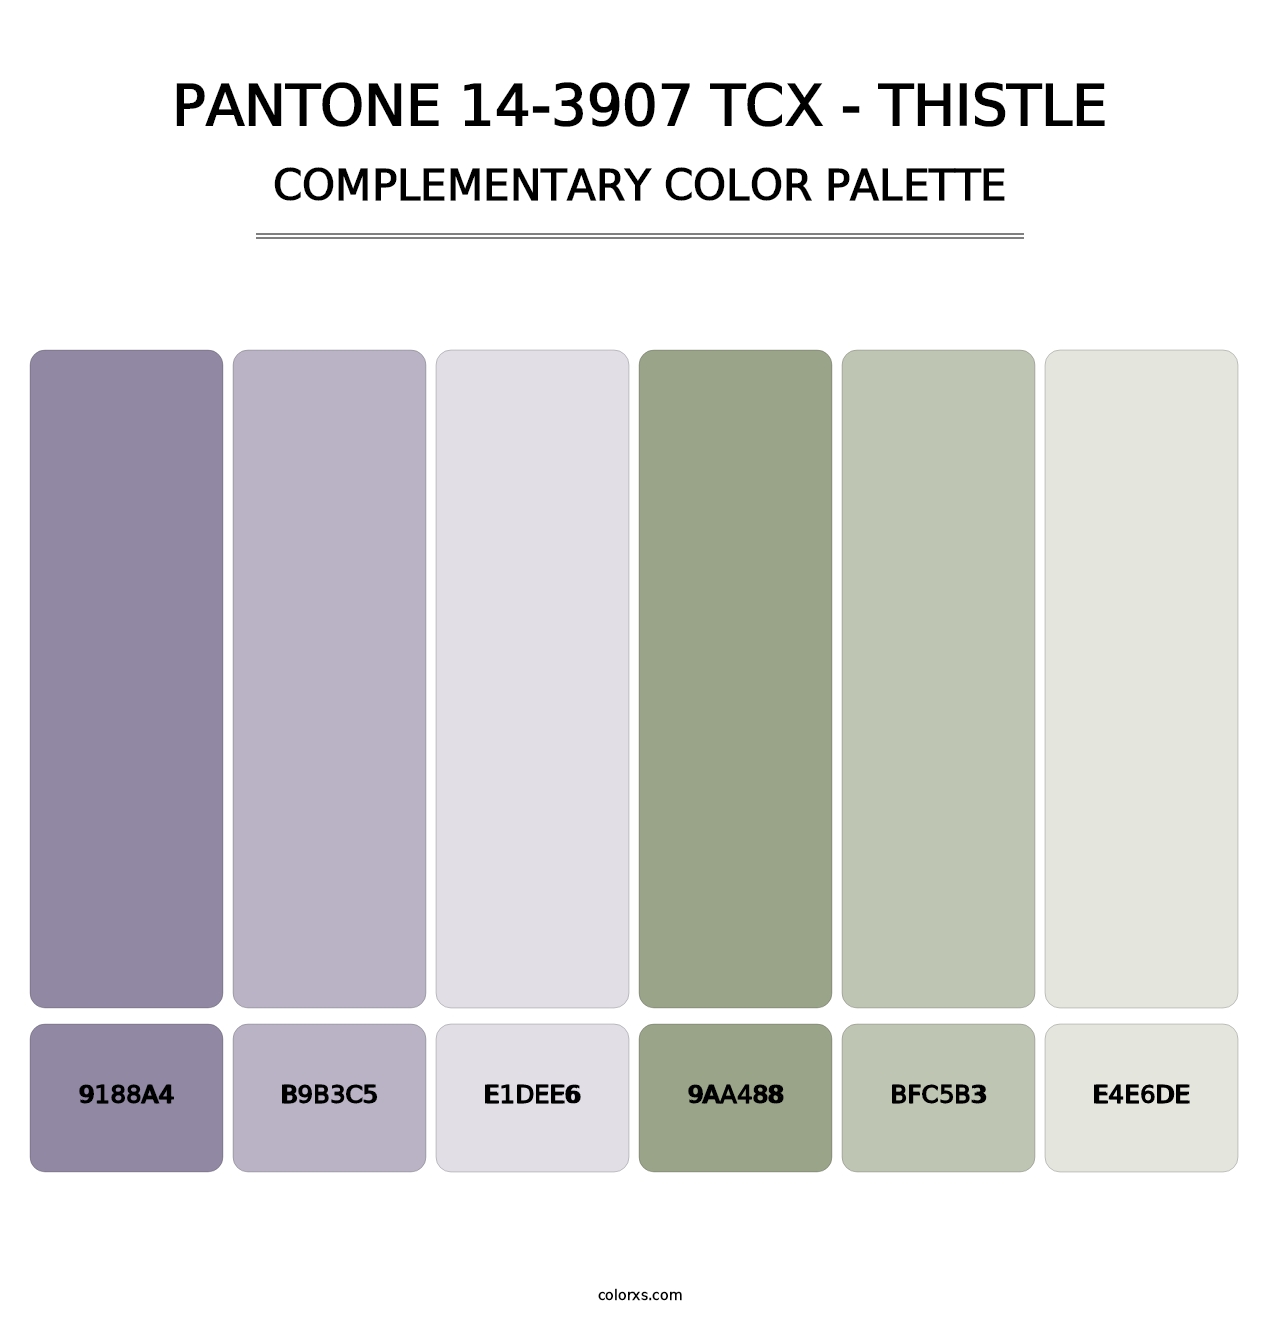 PANTONE 14-3907 TCX - Thistle - Complementary Color Palette